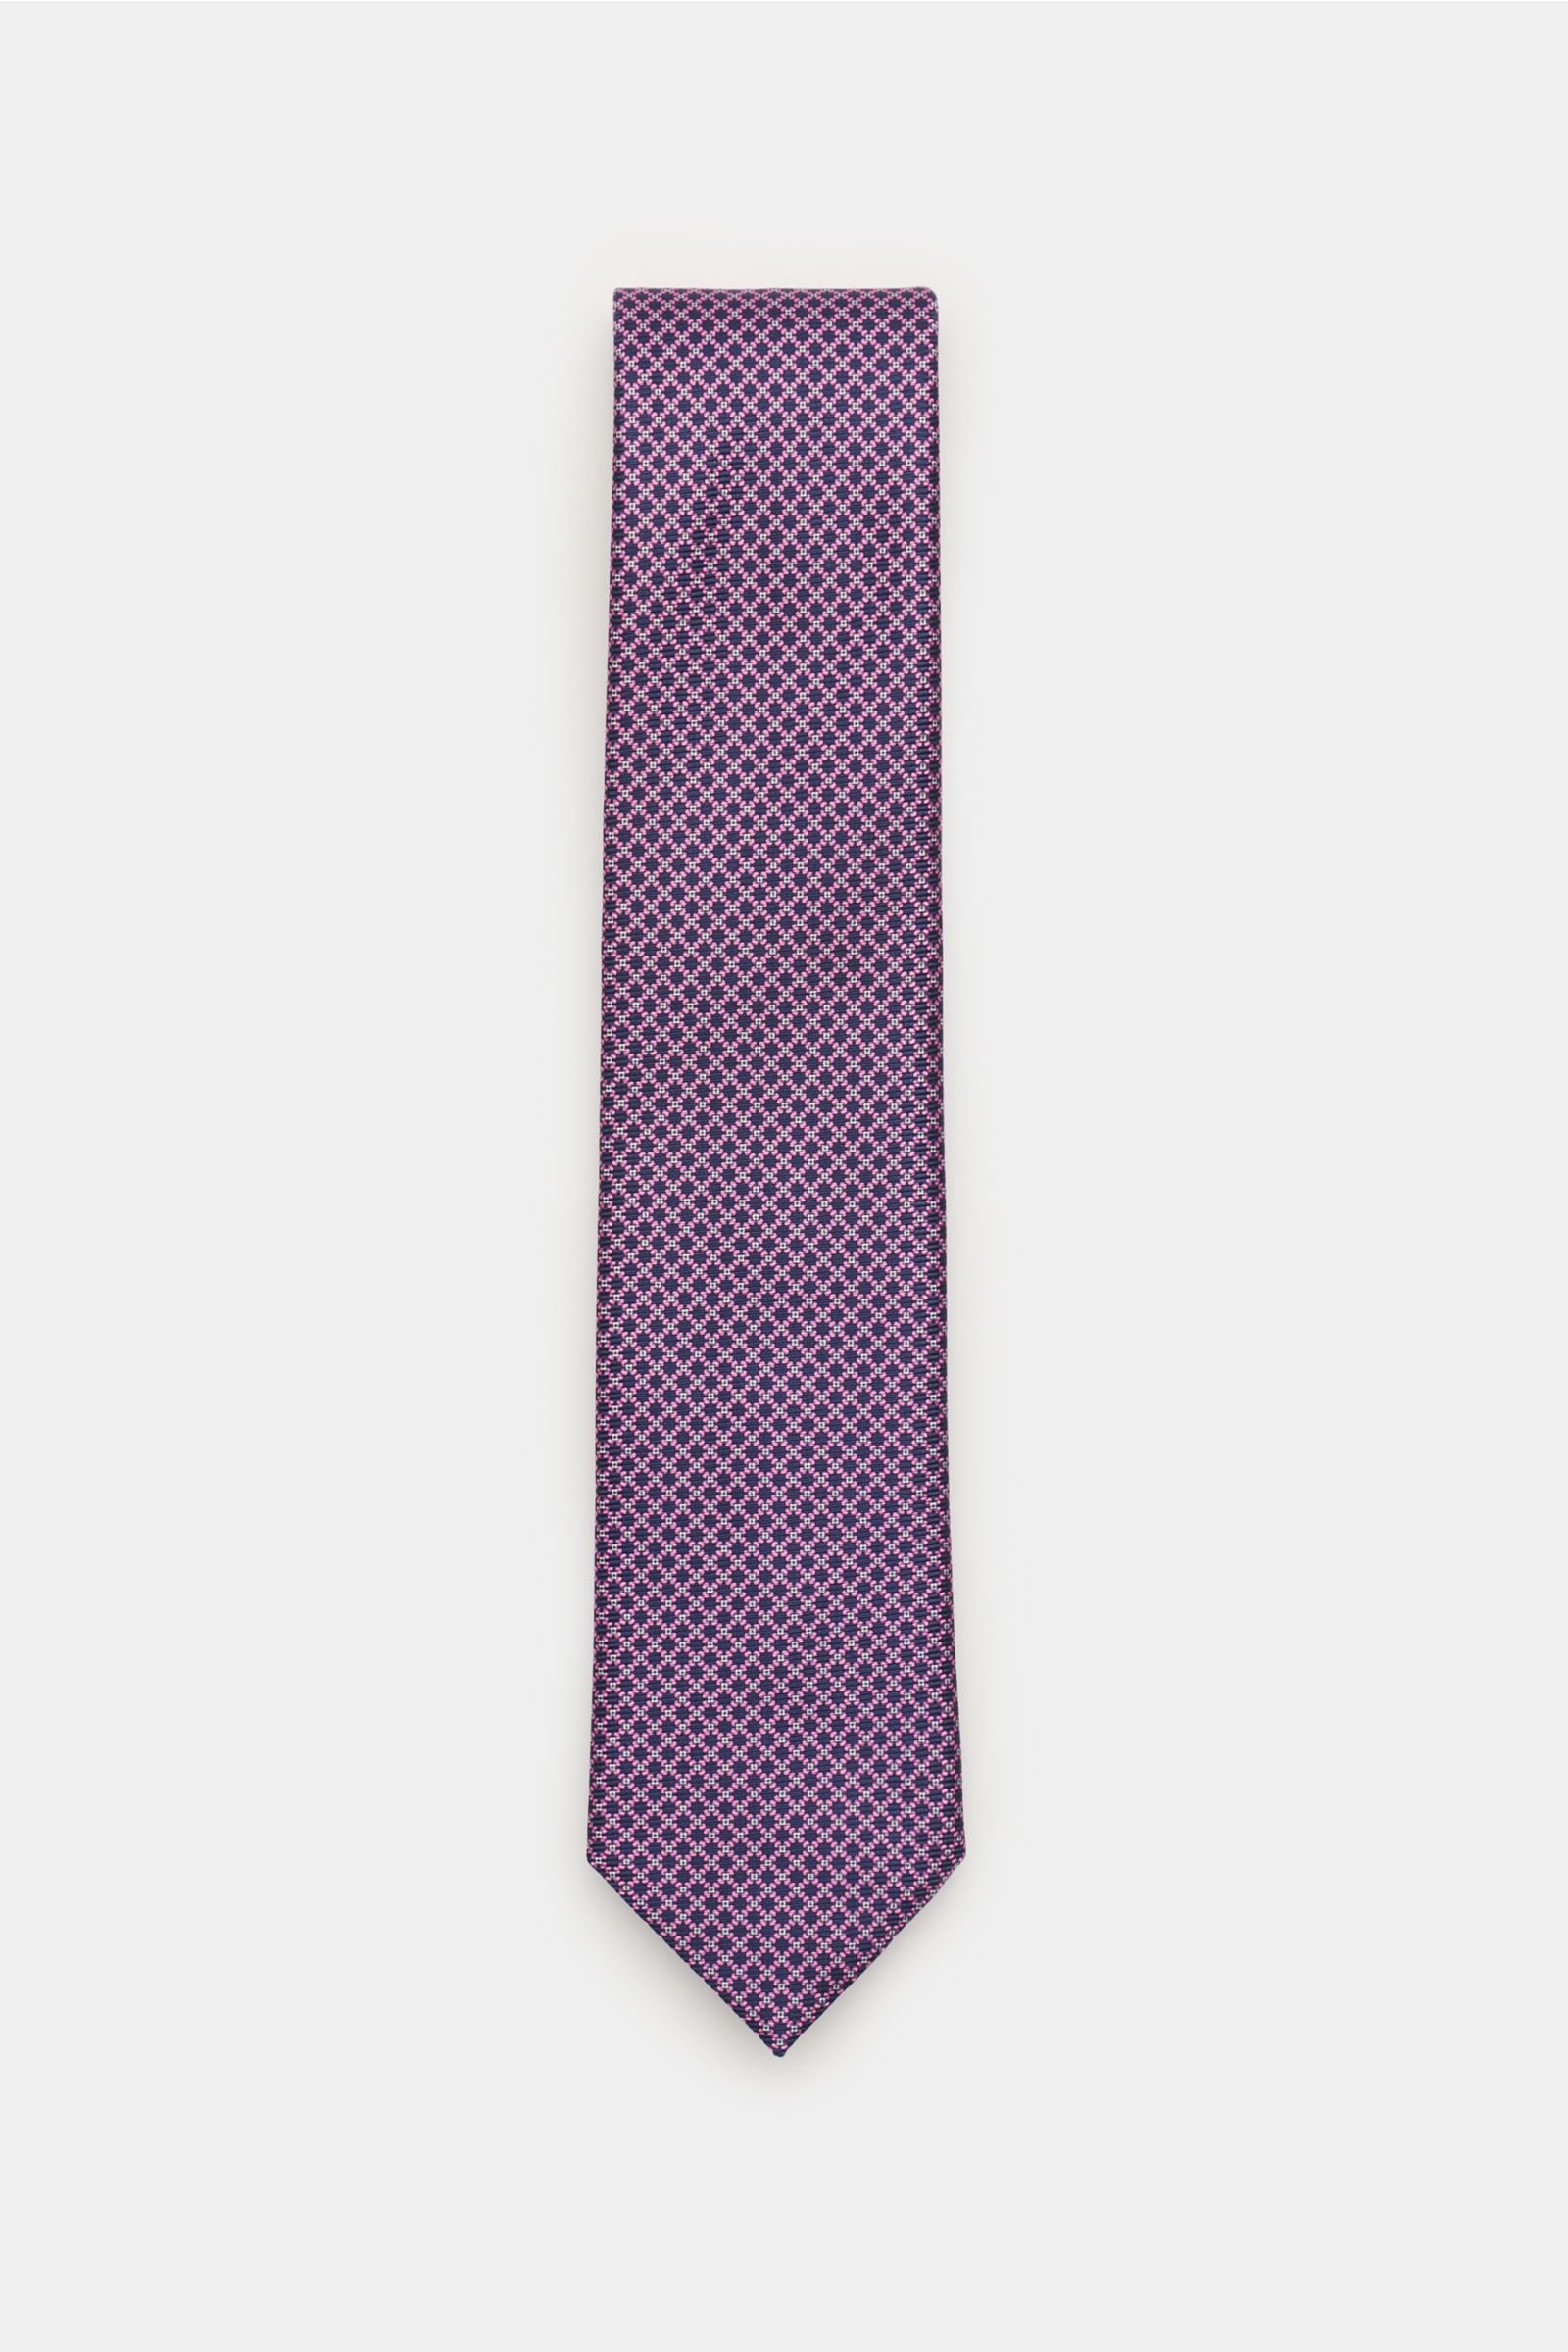 Silk tie navy/rose patterned